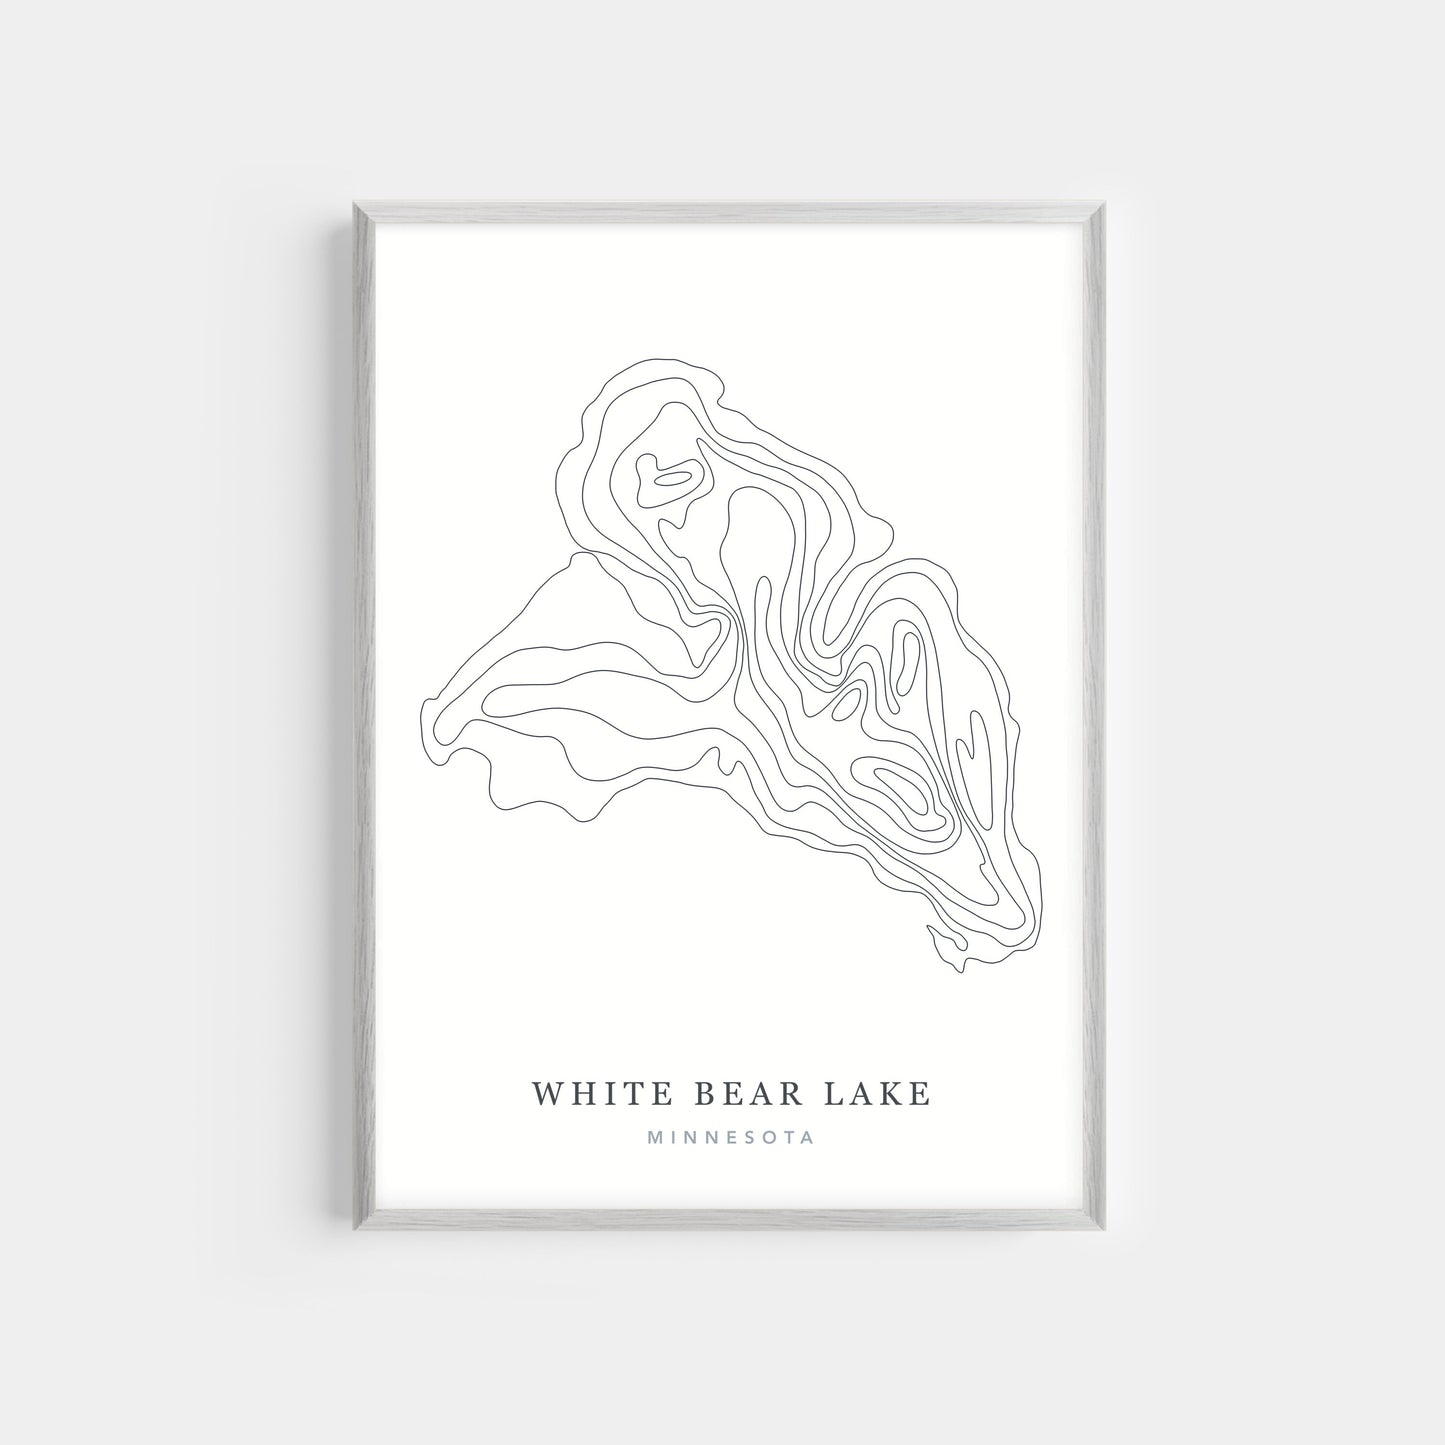 White Bear Lake, Minnesota | Photo Print